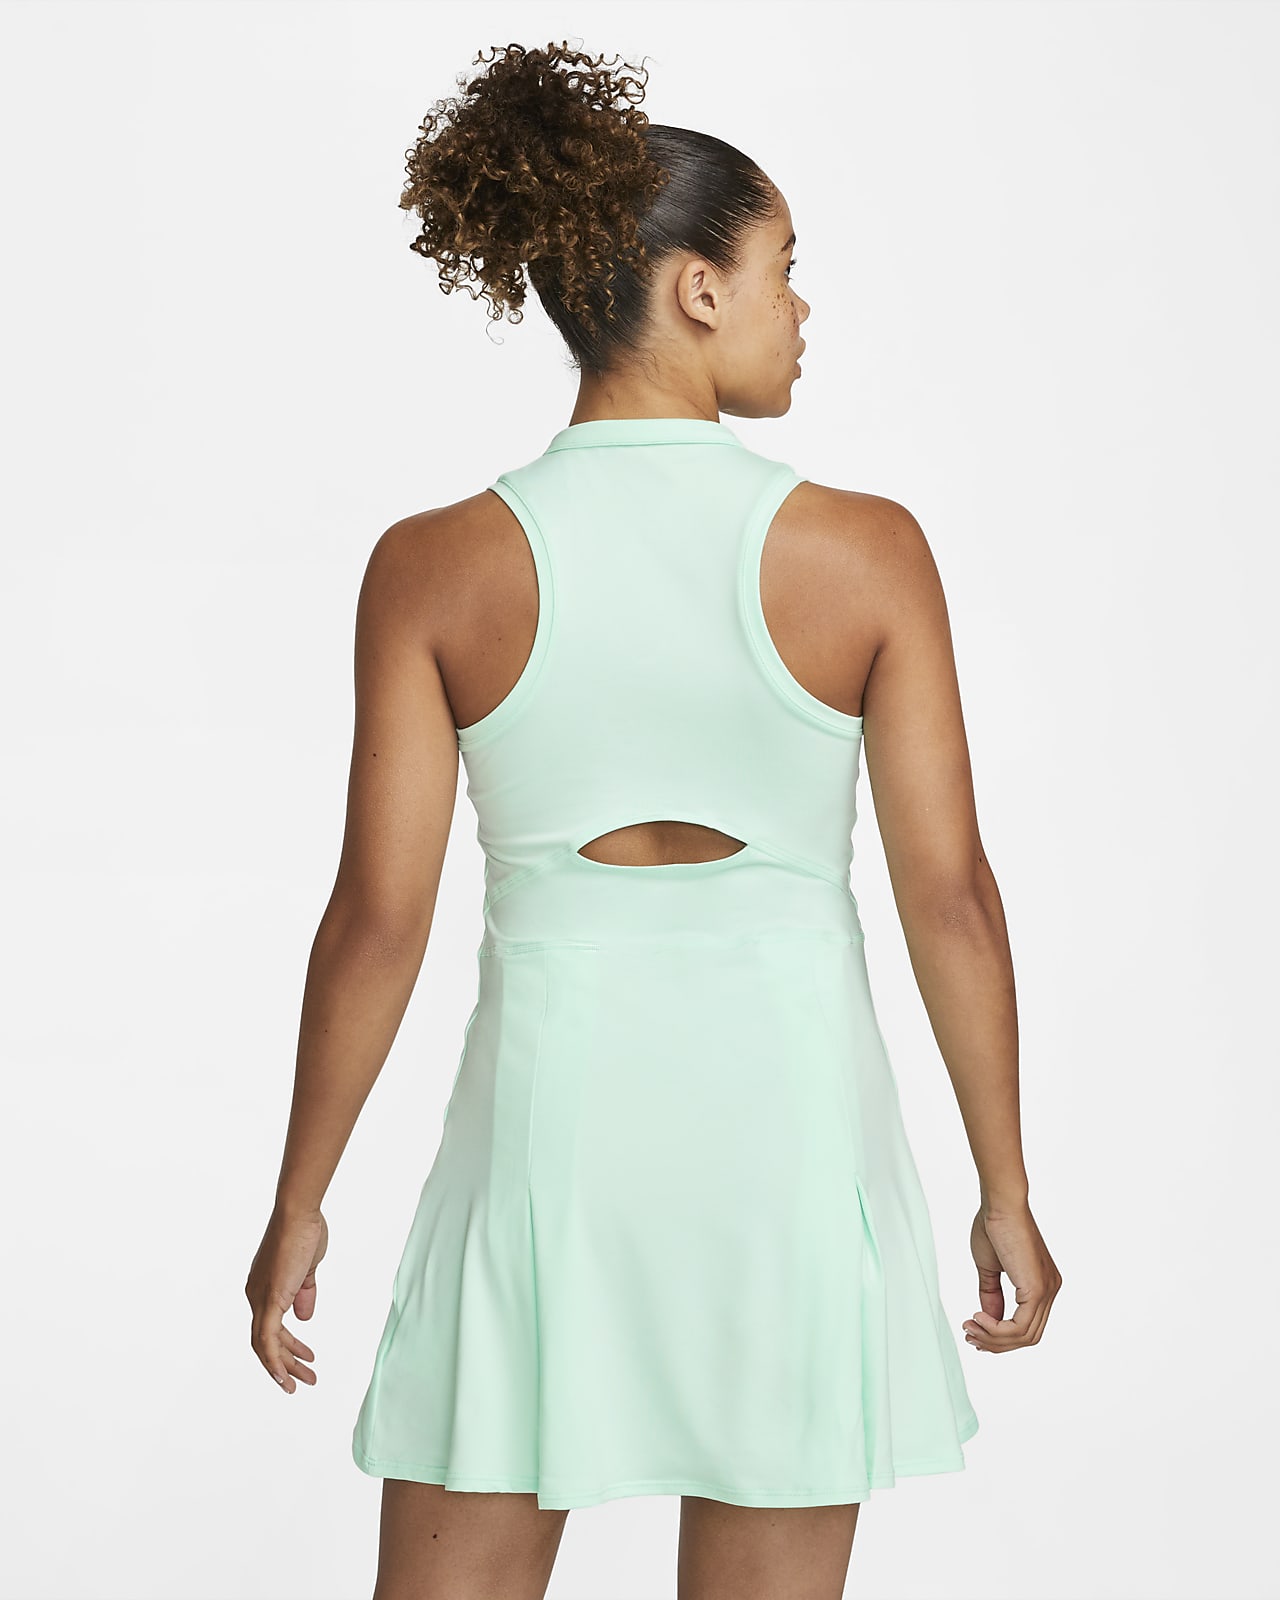 Nike / Women's NikeCourt Dri-FIT Victory Tennis Dress